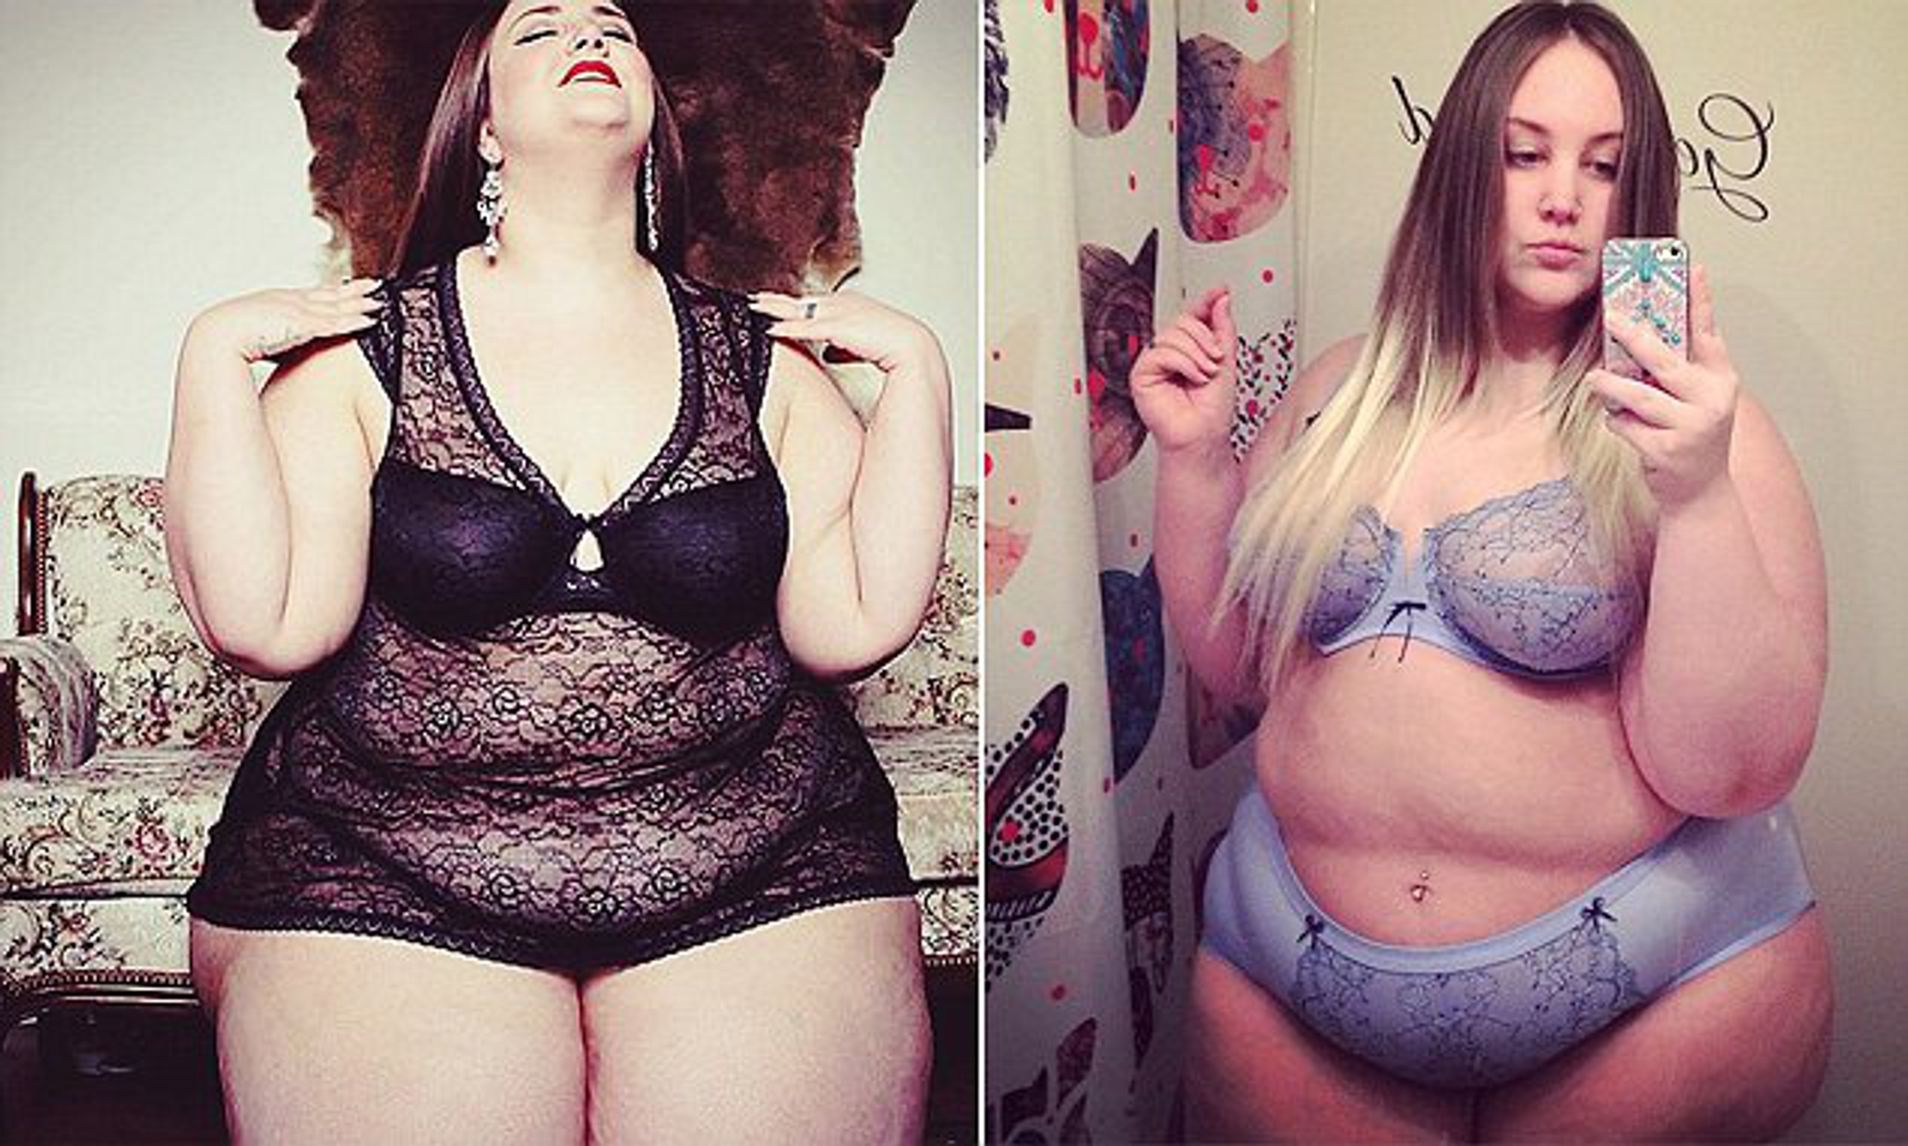 Hot Fat Chicks Naked Selfie - Naked Fat Chicks on Social Networks (64 photos) - sex eporner pics